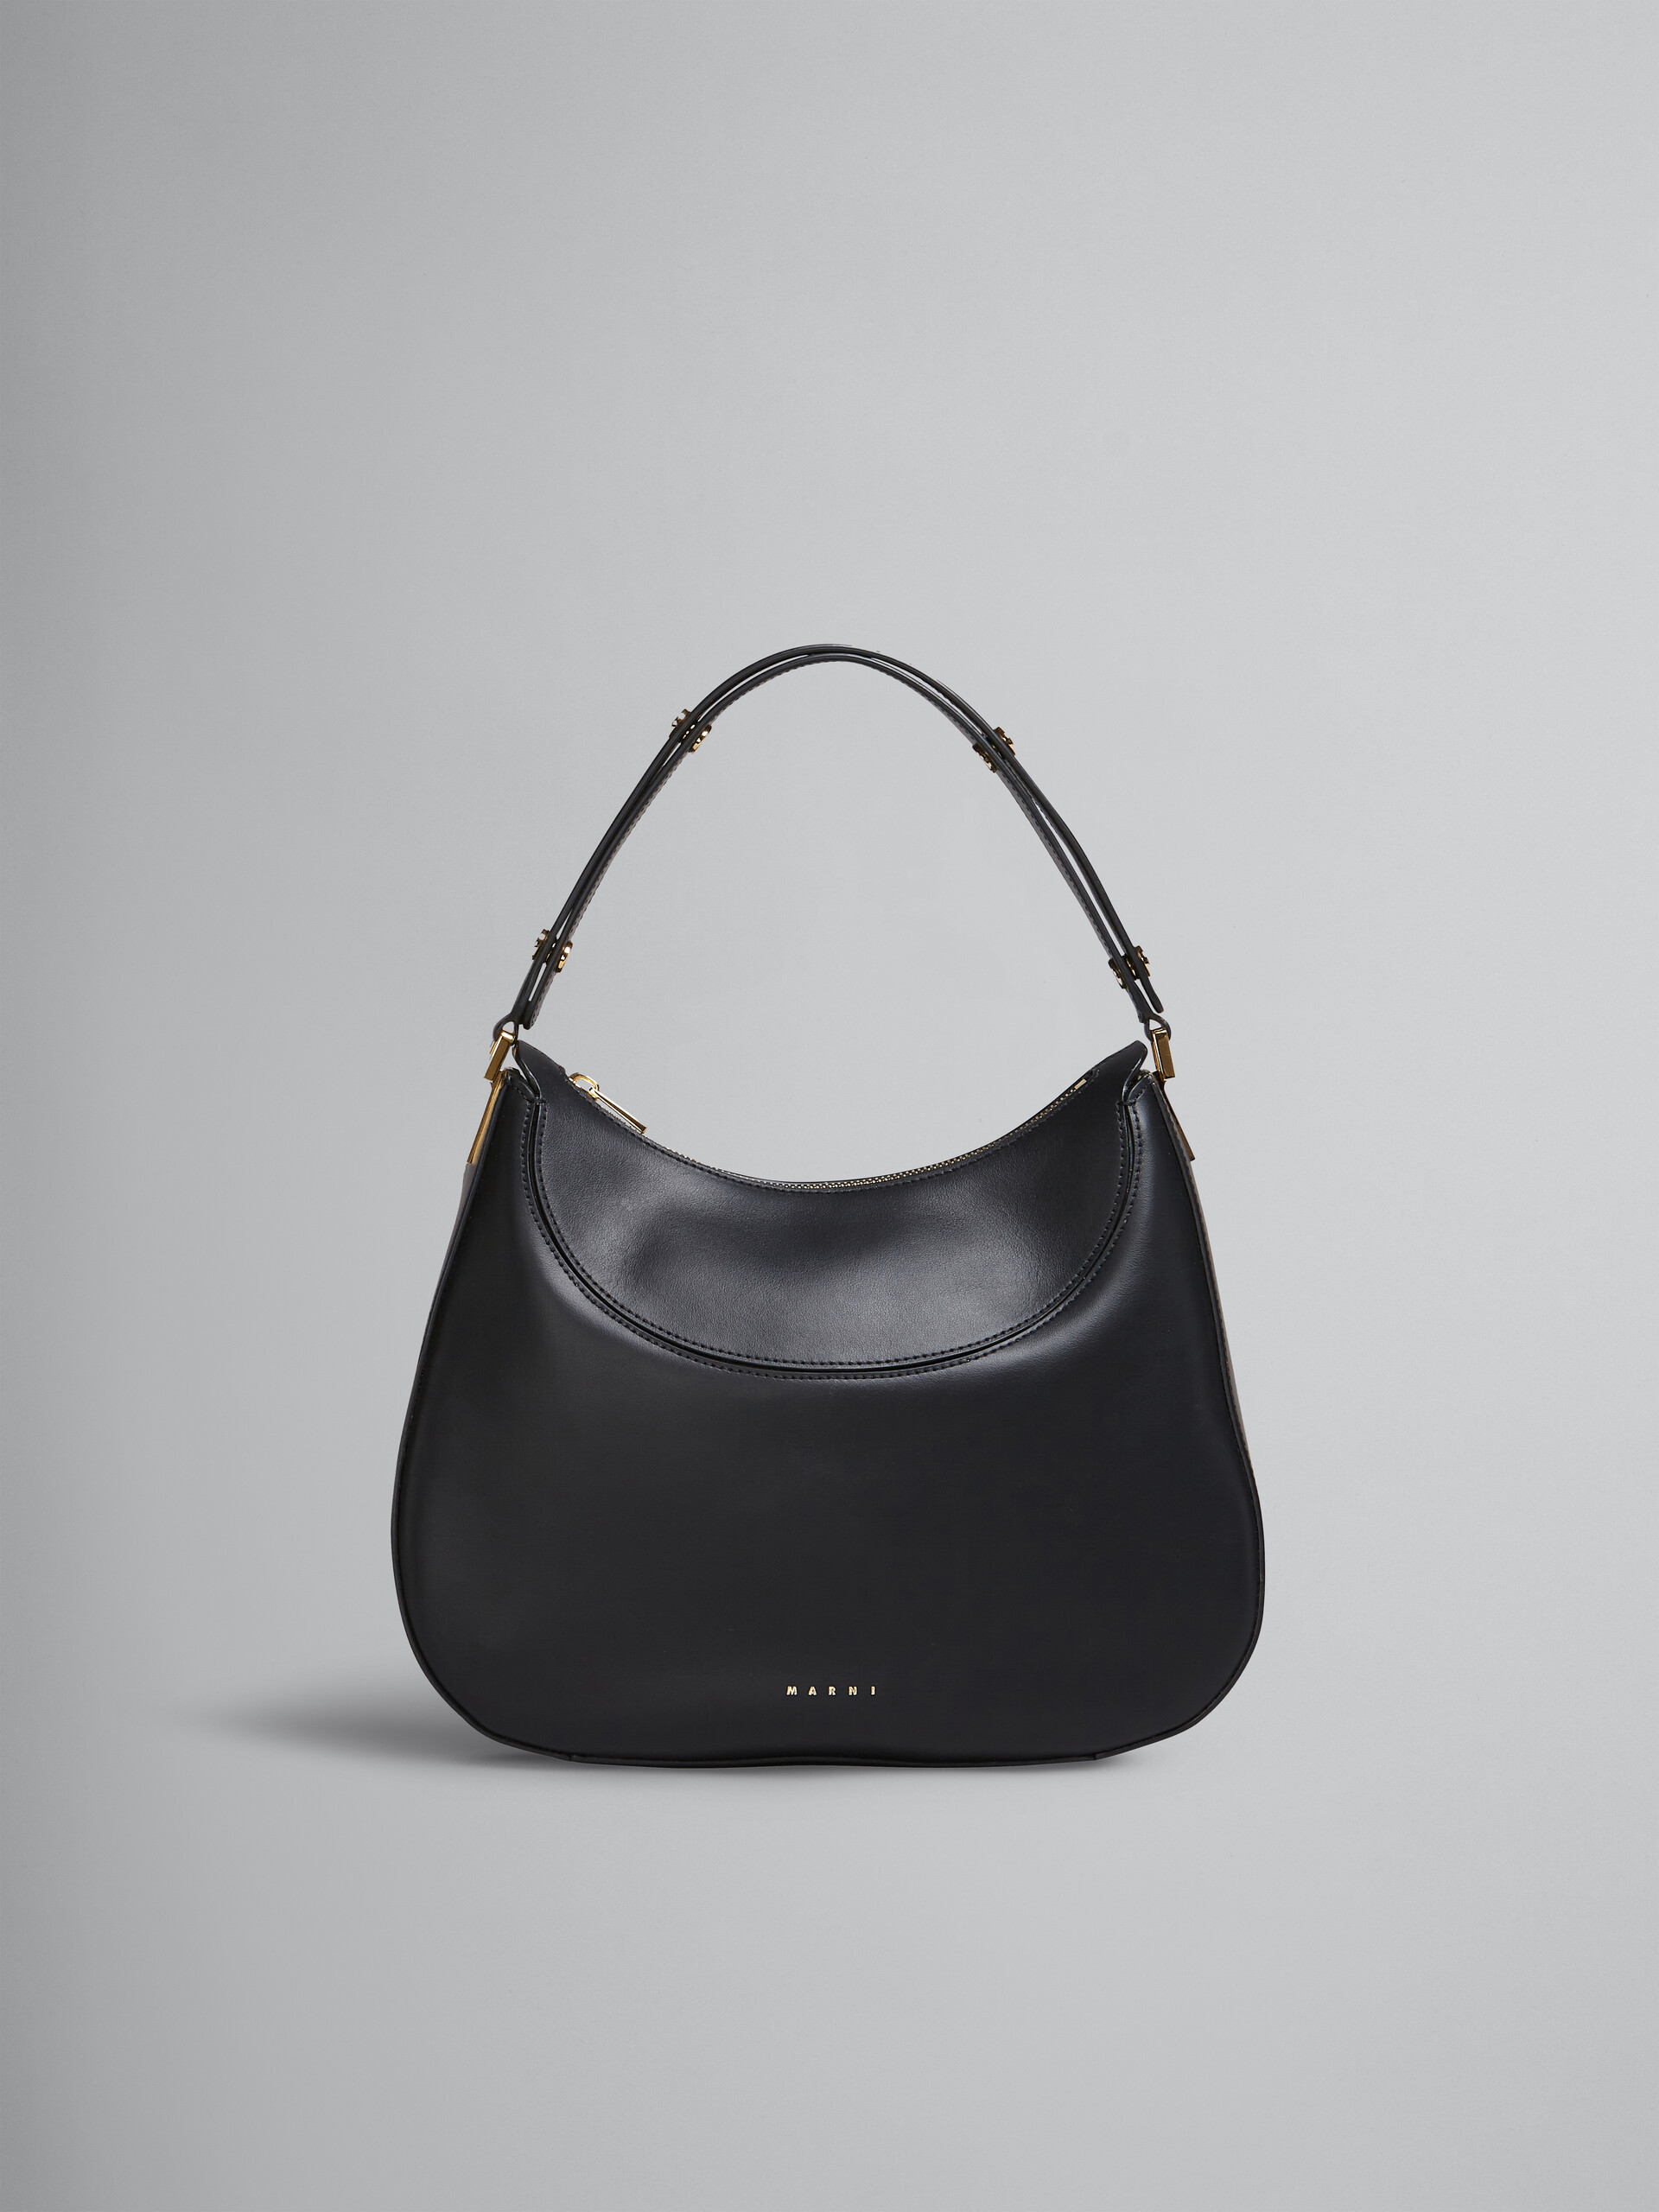 Milano large bag in black leather - Handbag - Image 1